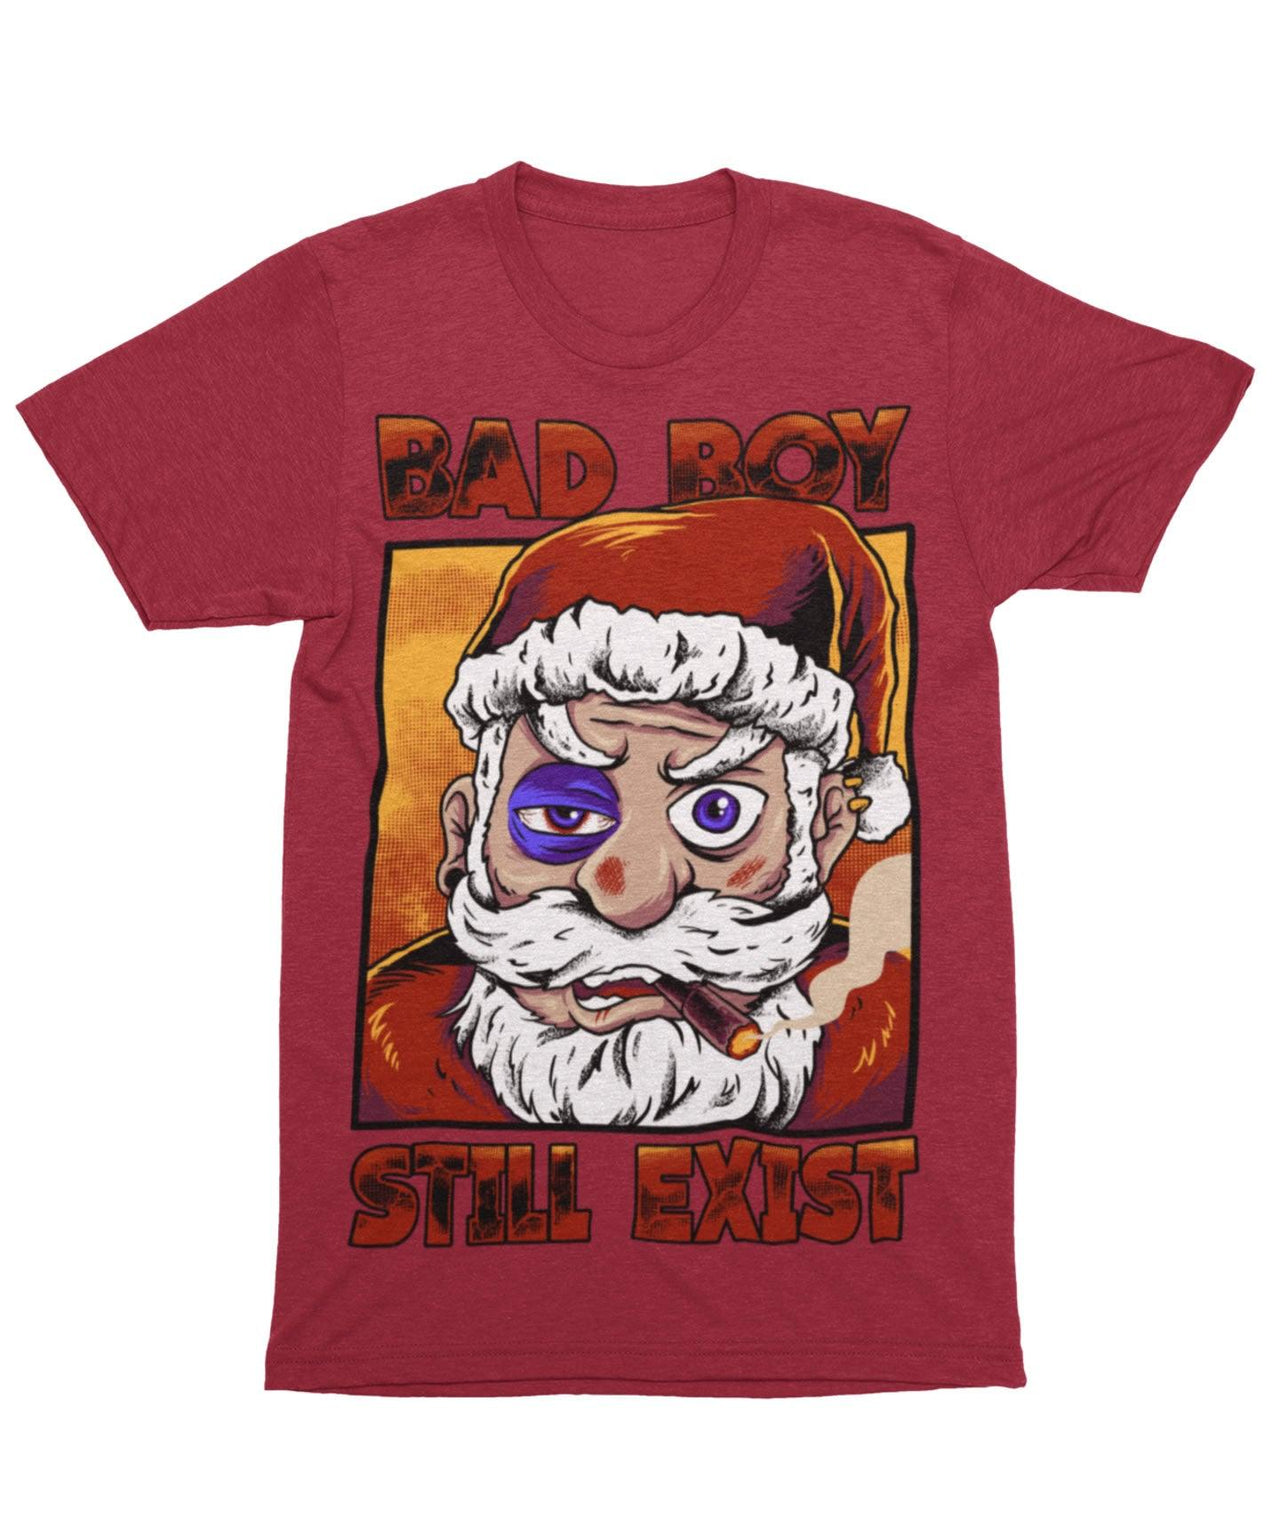 Bad Boy Santa Still Exists Unisex Christmas Graphic T-Shirt For Men 8Ball